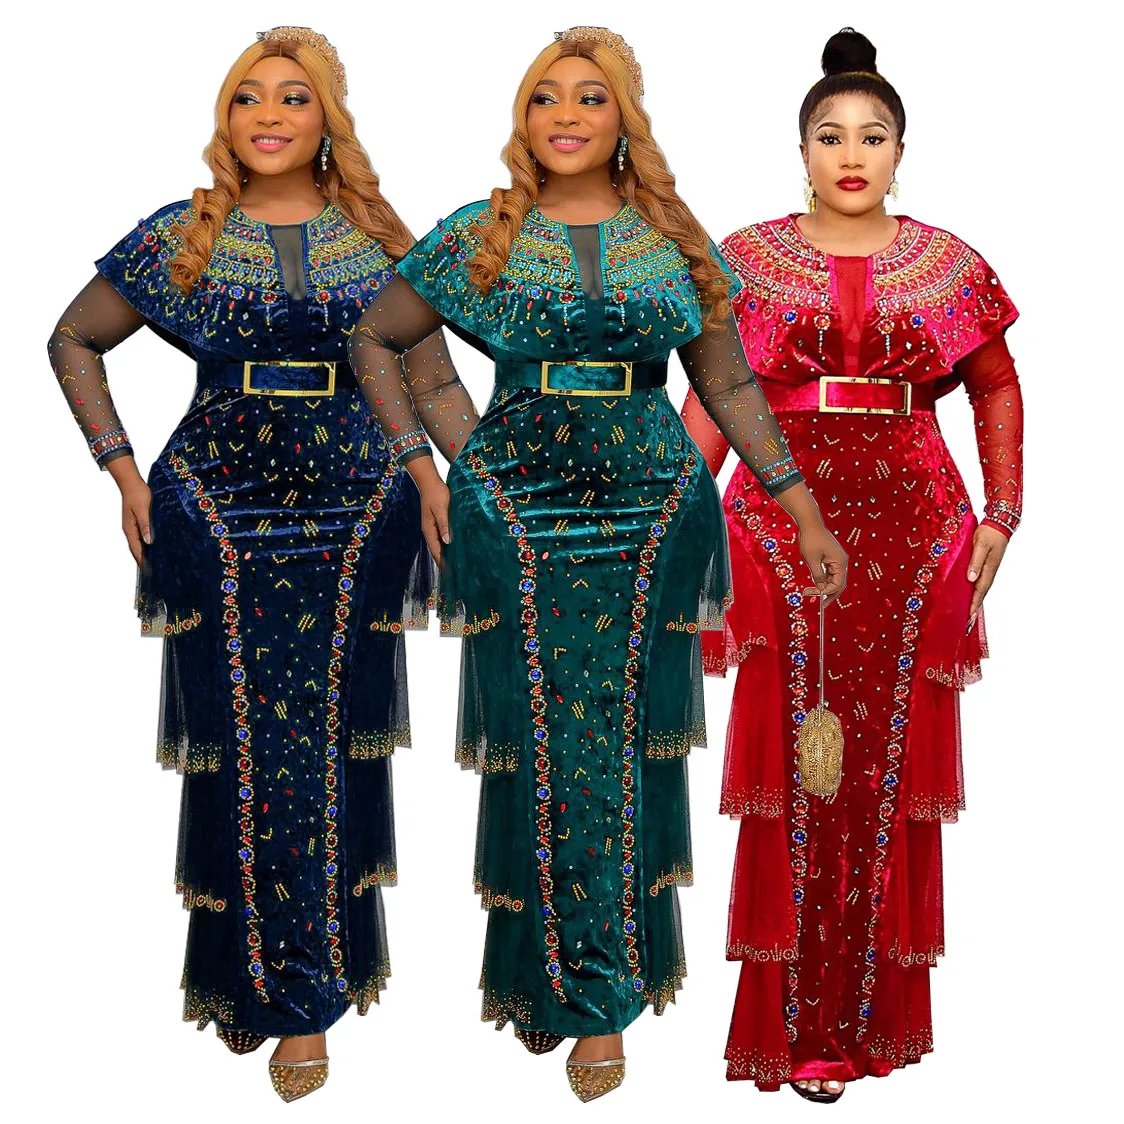 Women Elegant Velvet Stretch Maxi Dress O Neck Long Sleeve With Belt Fashion African Dresses Rhinestone Evening Party Dresses